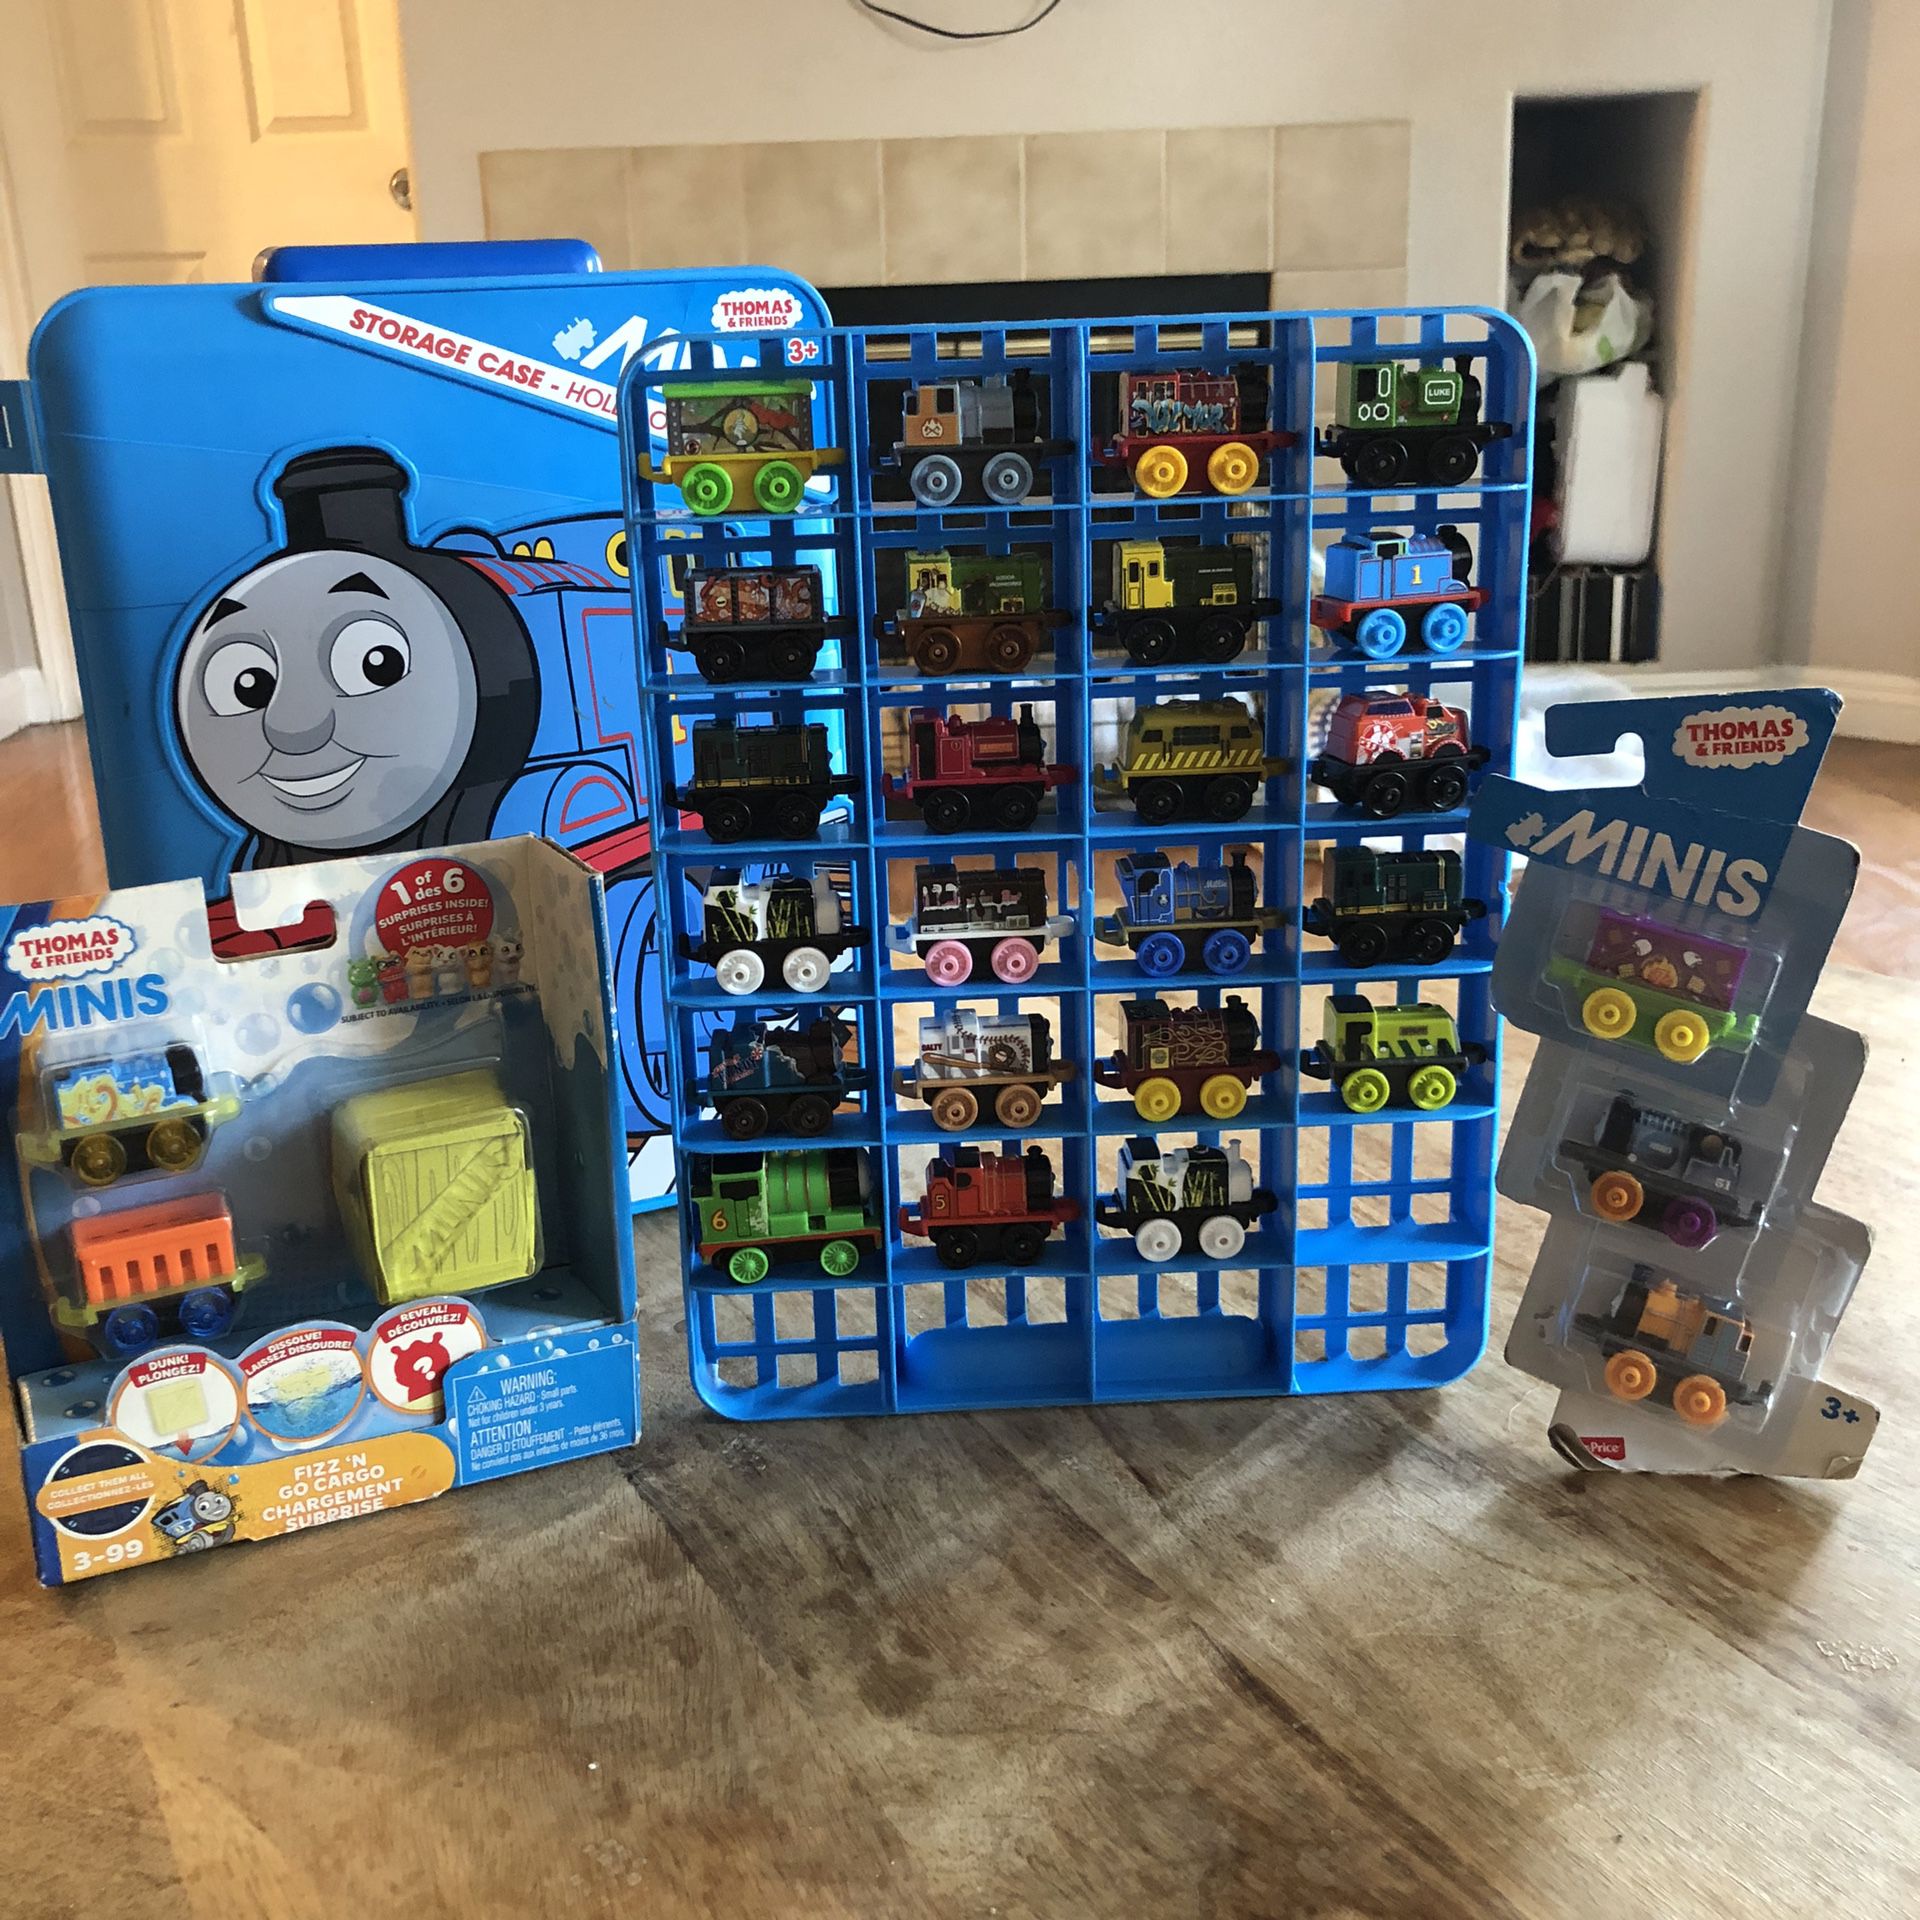 28 Thomas & Friends Minis Trains Total . Some pre own great shape and some new  Thomas & Friends MINIS - Fizz 'N Go Cargo Surprise New  Thomas and Fri